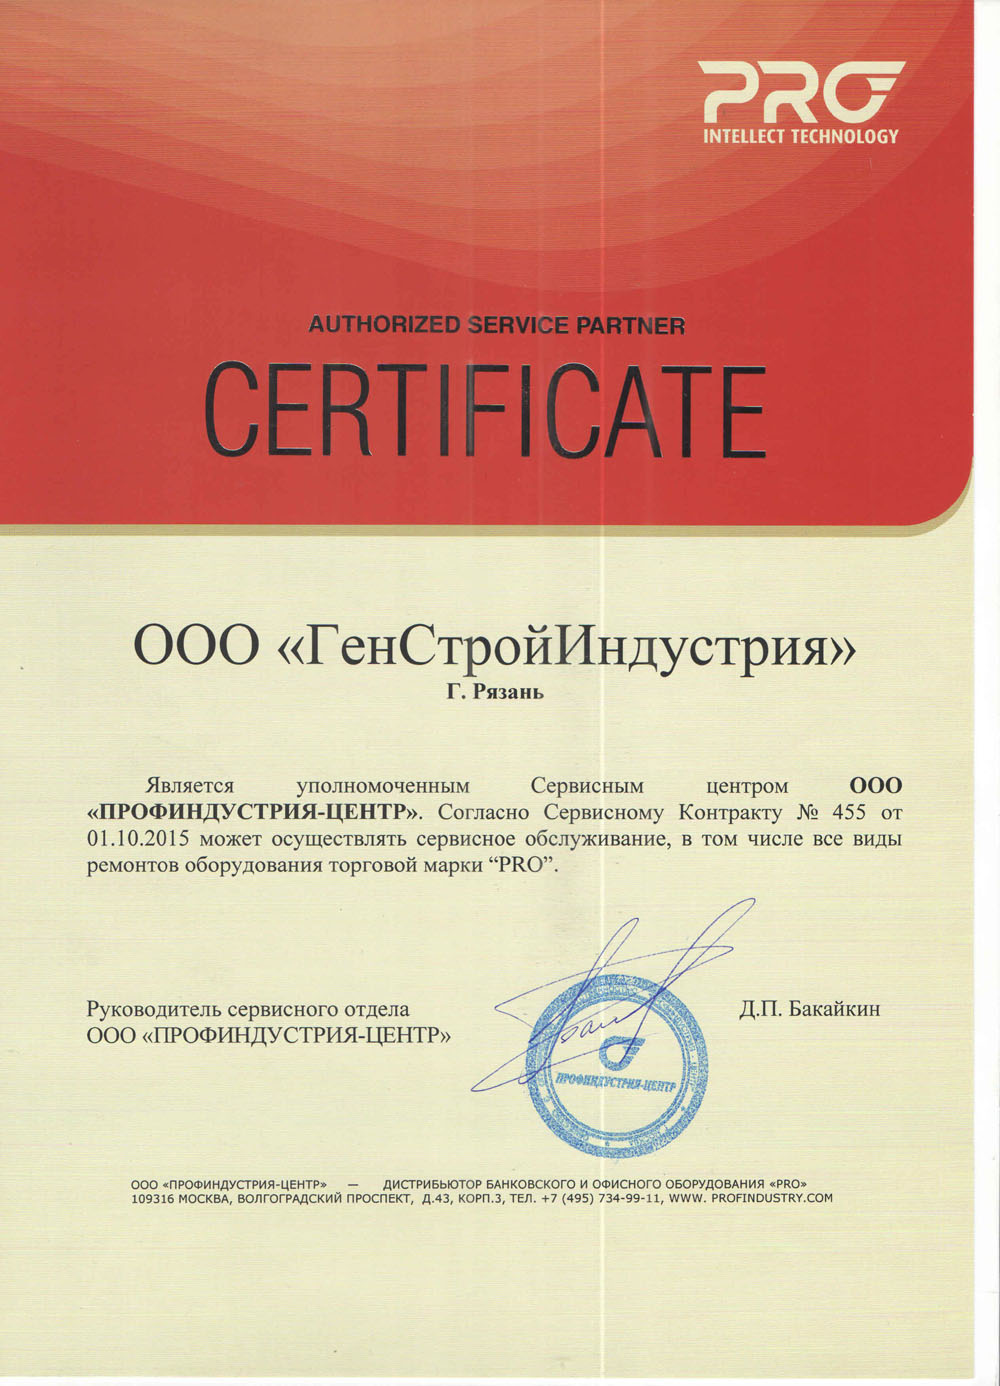 сертификат от 2015 года